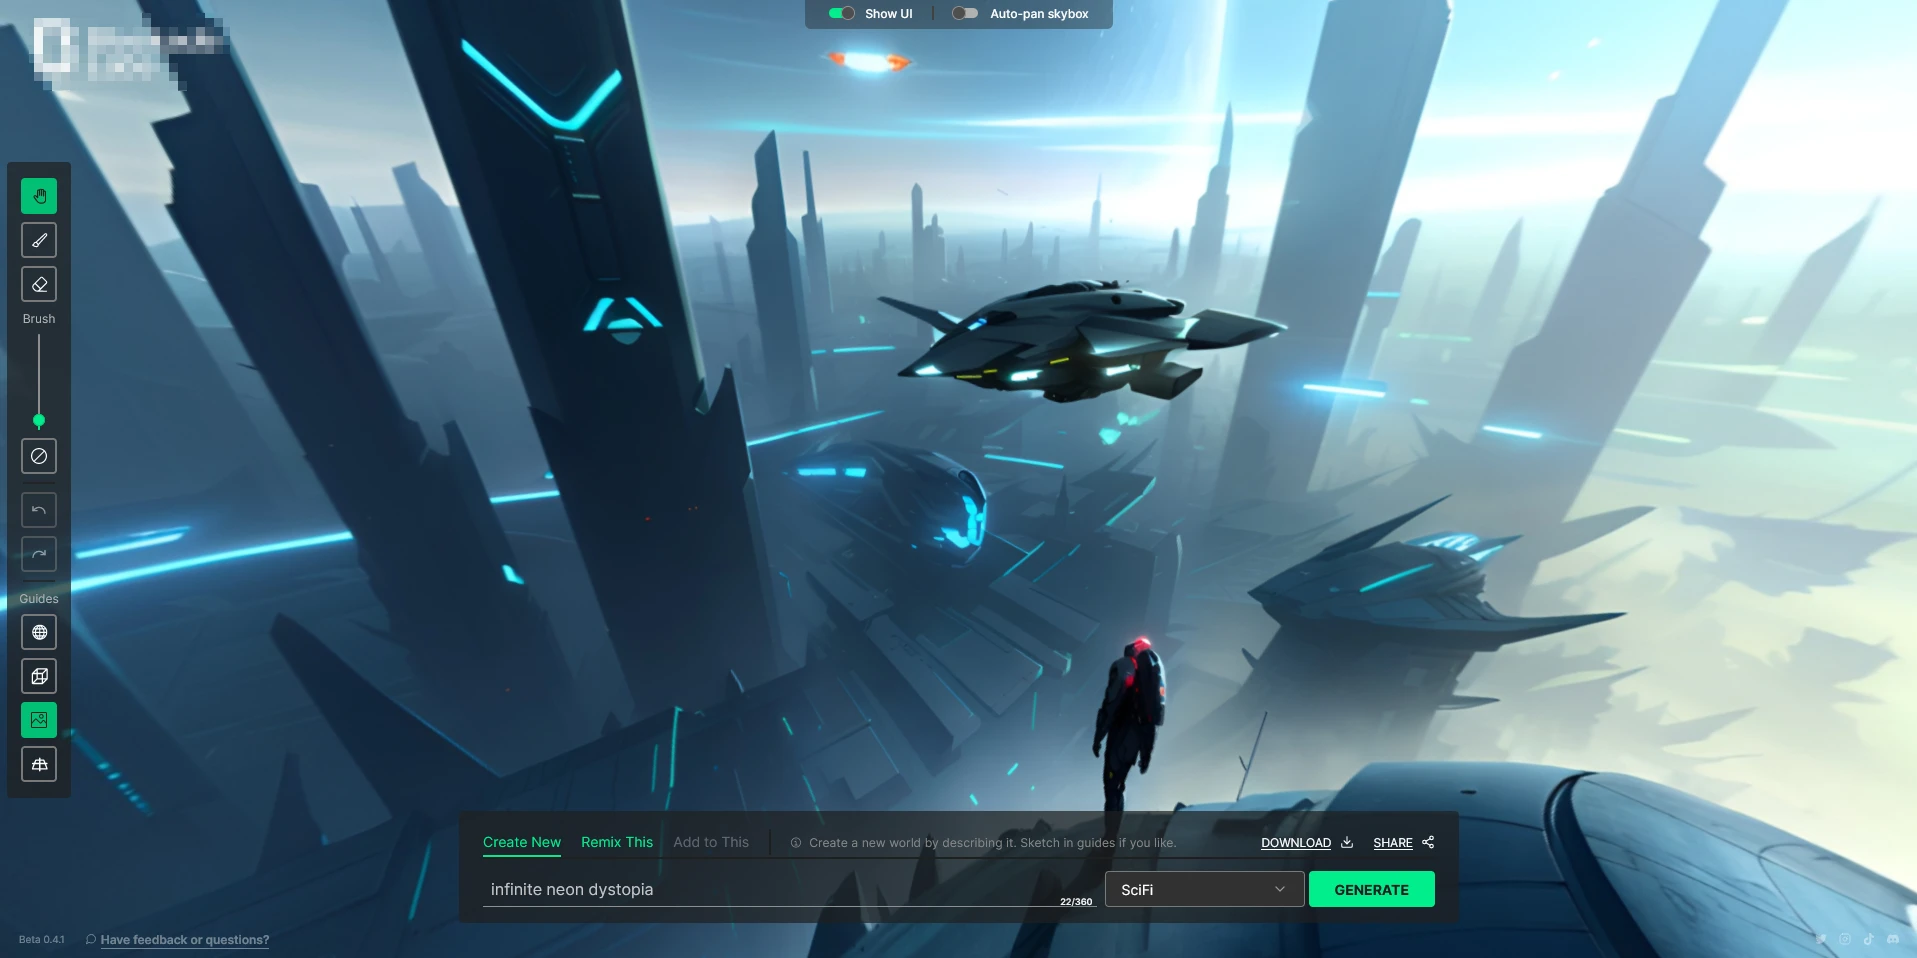 Fundstück der Woche: Skybox AI 360-Grad